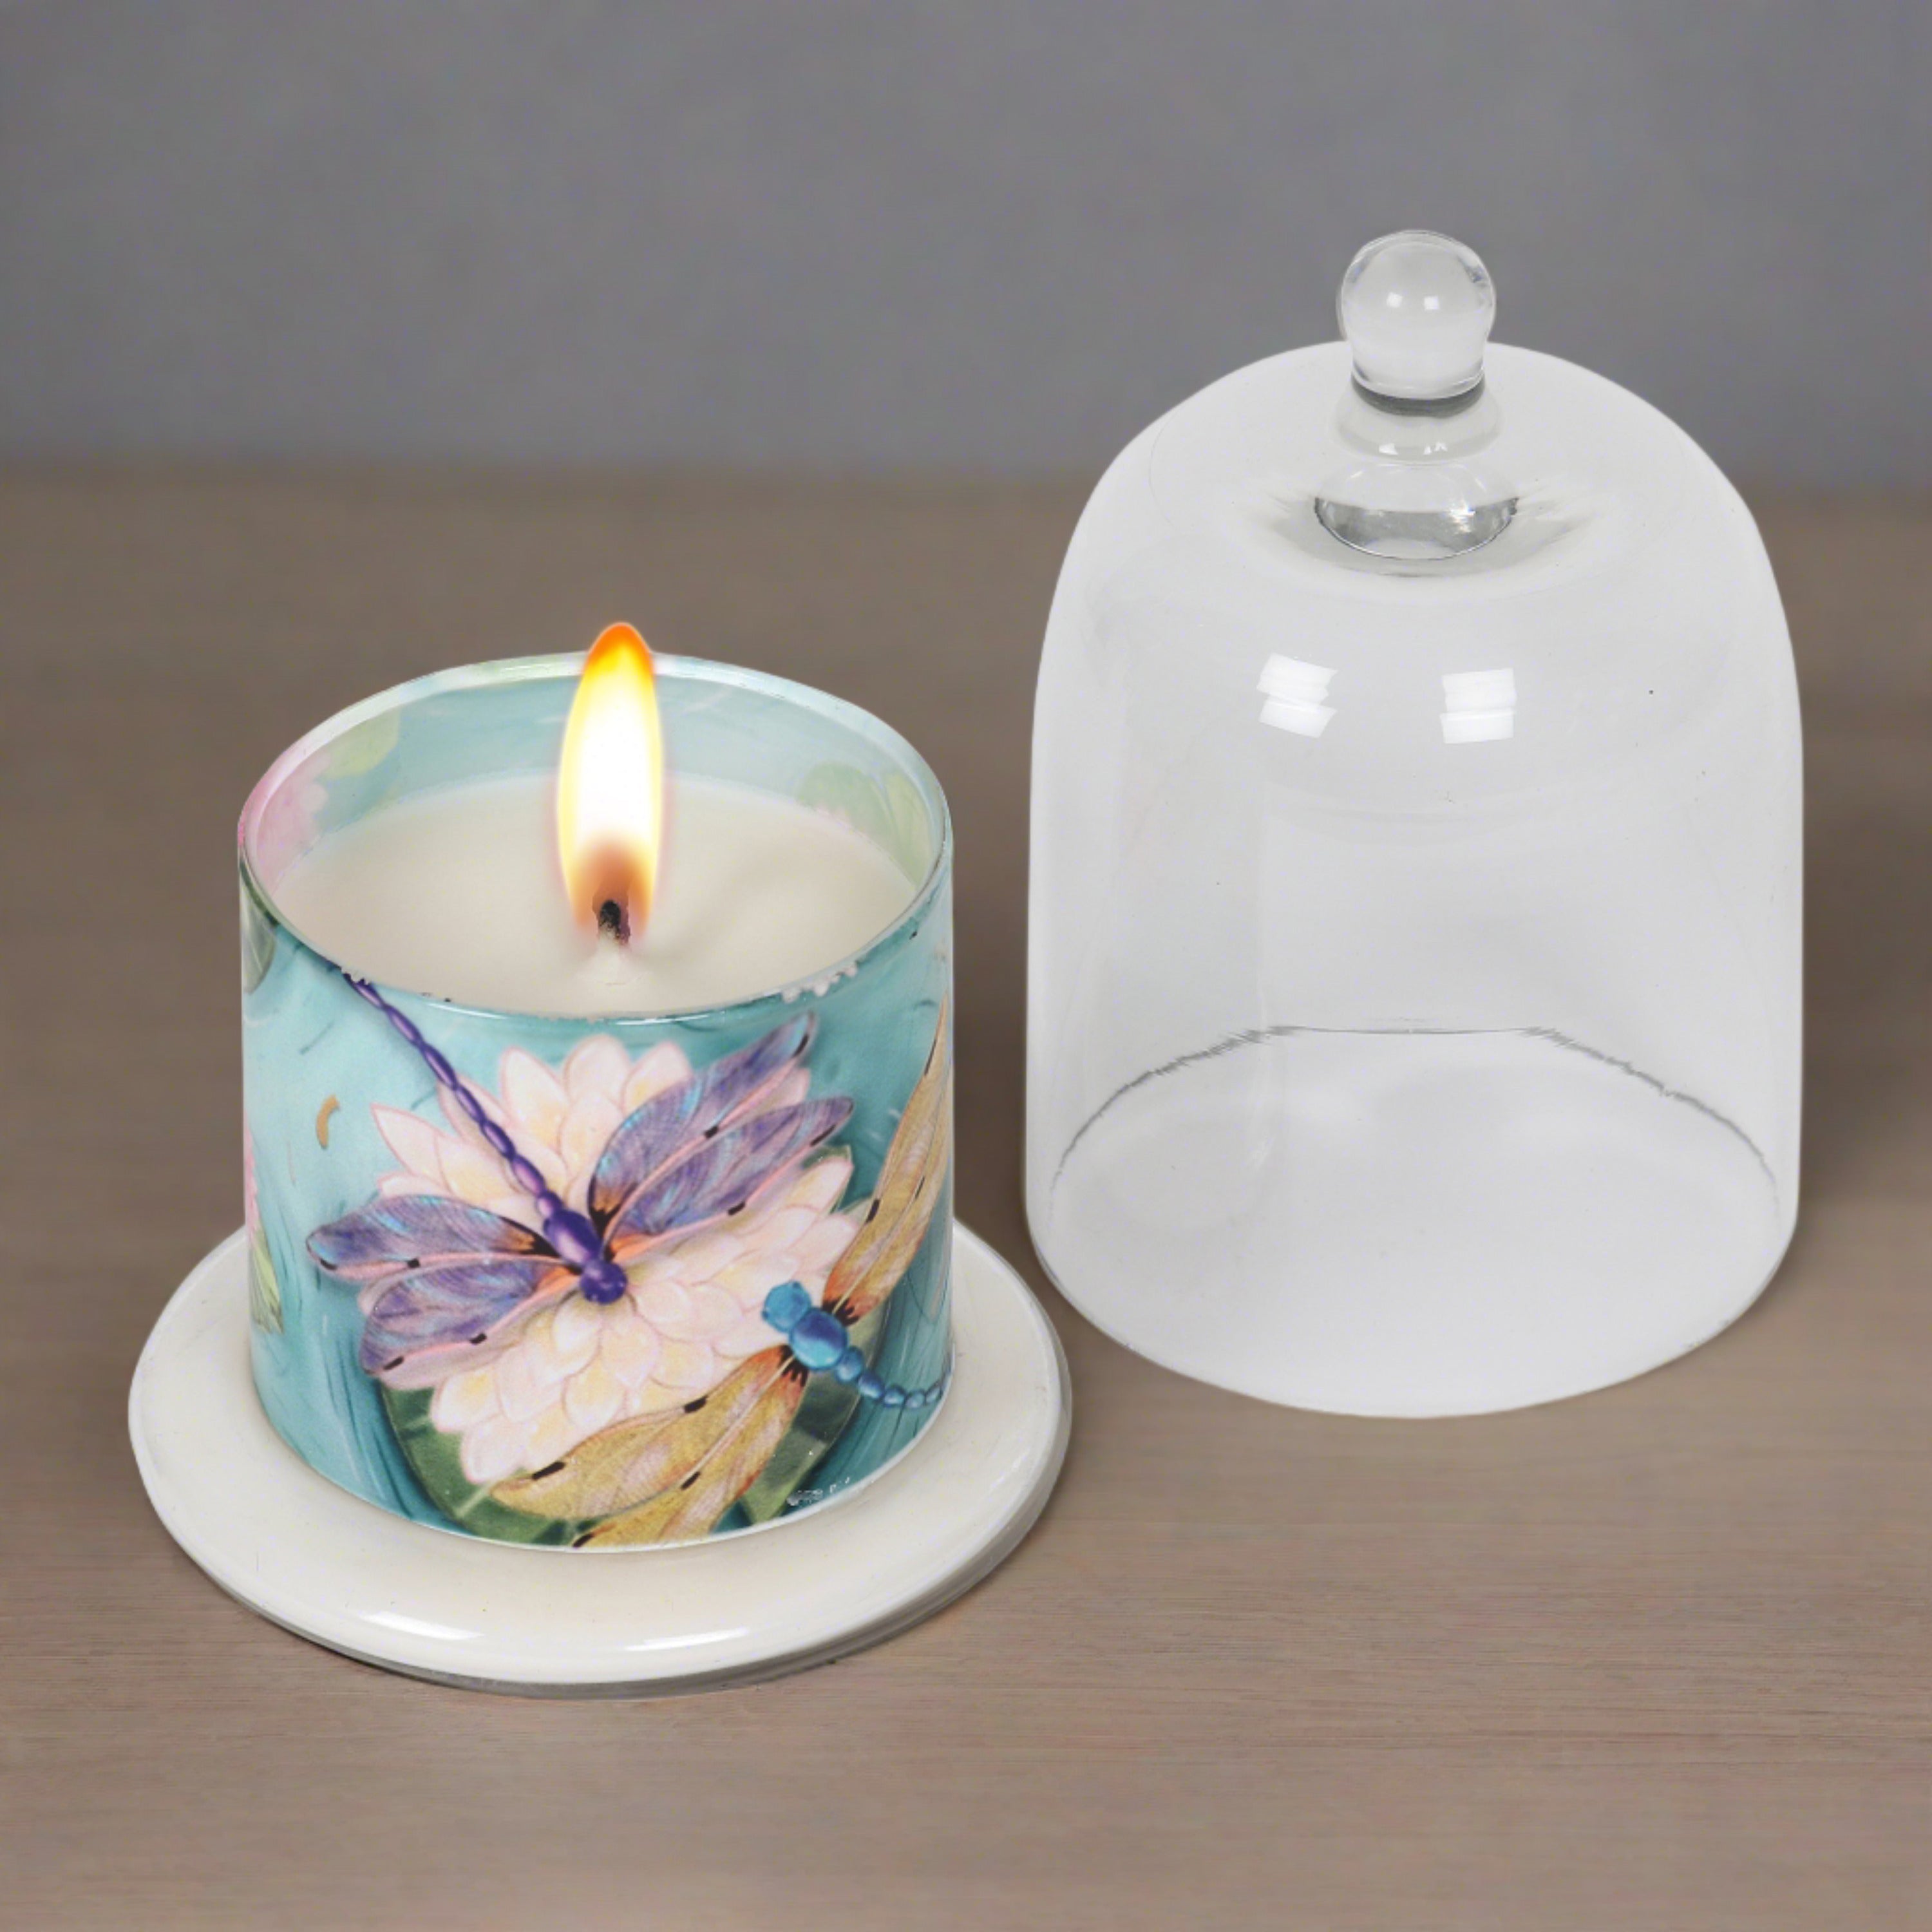 Bell Jar Scented Candle - Lavender